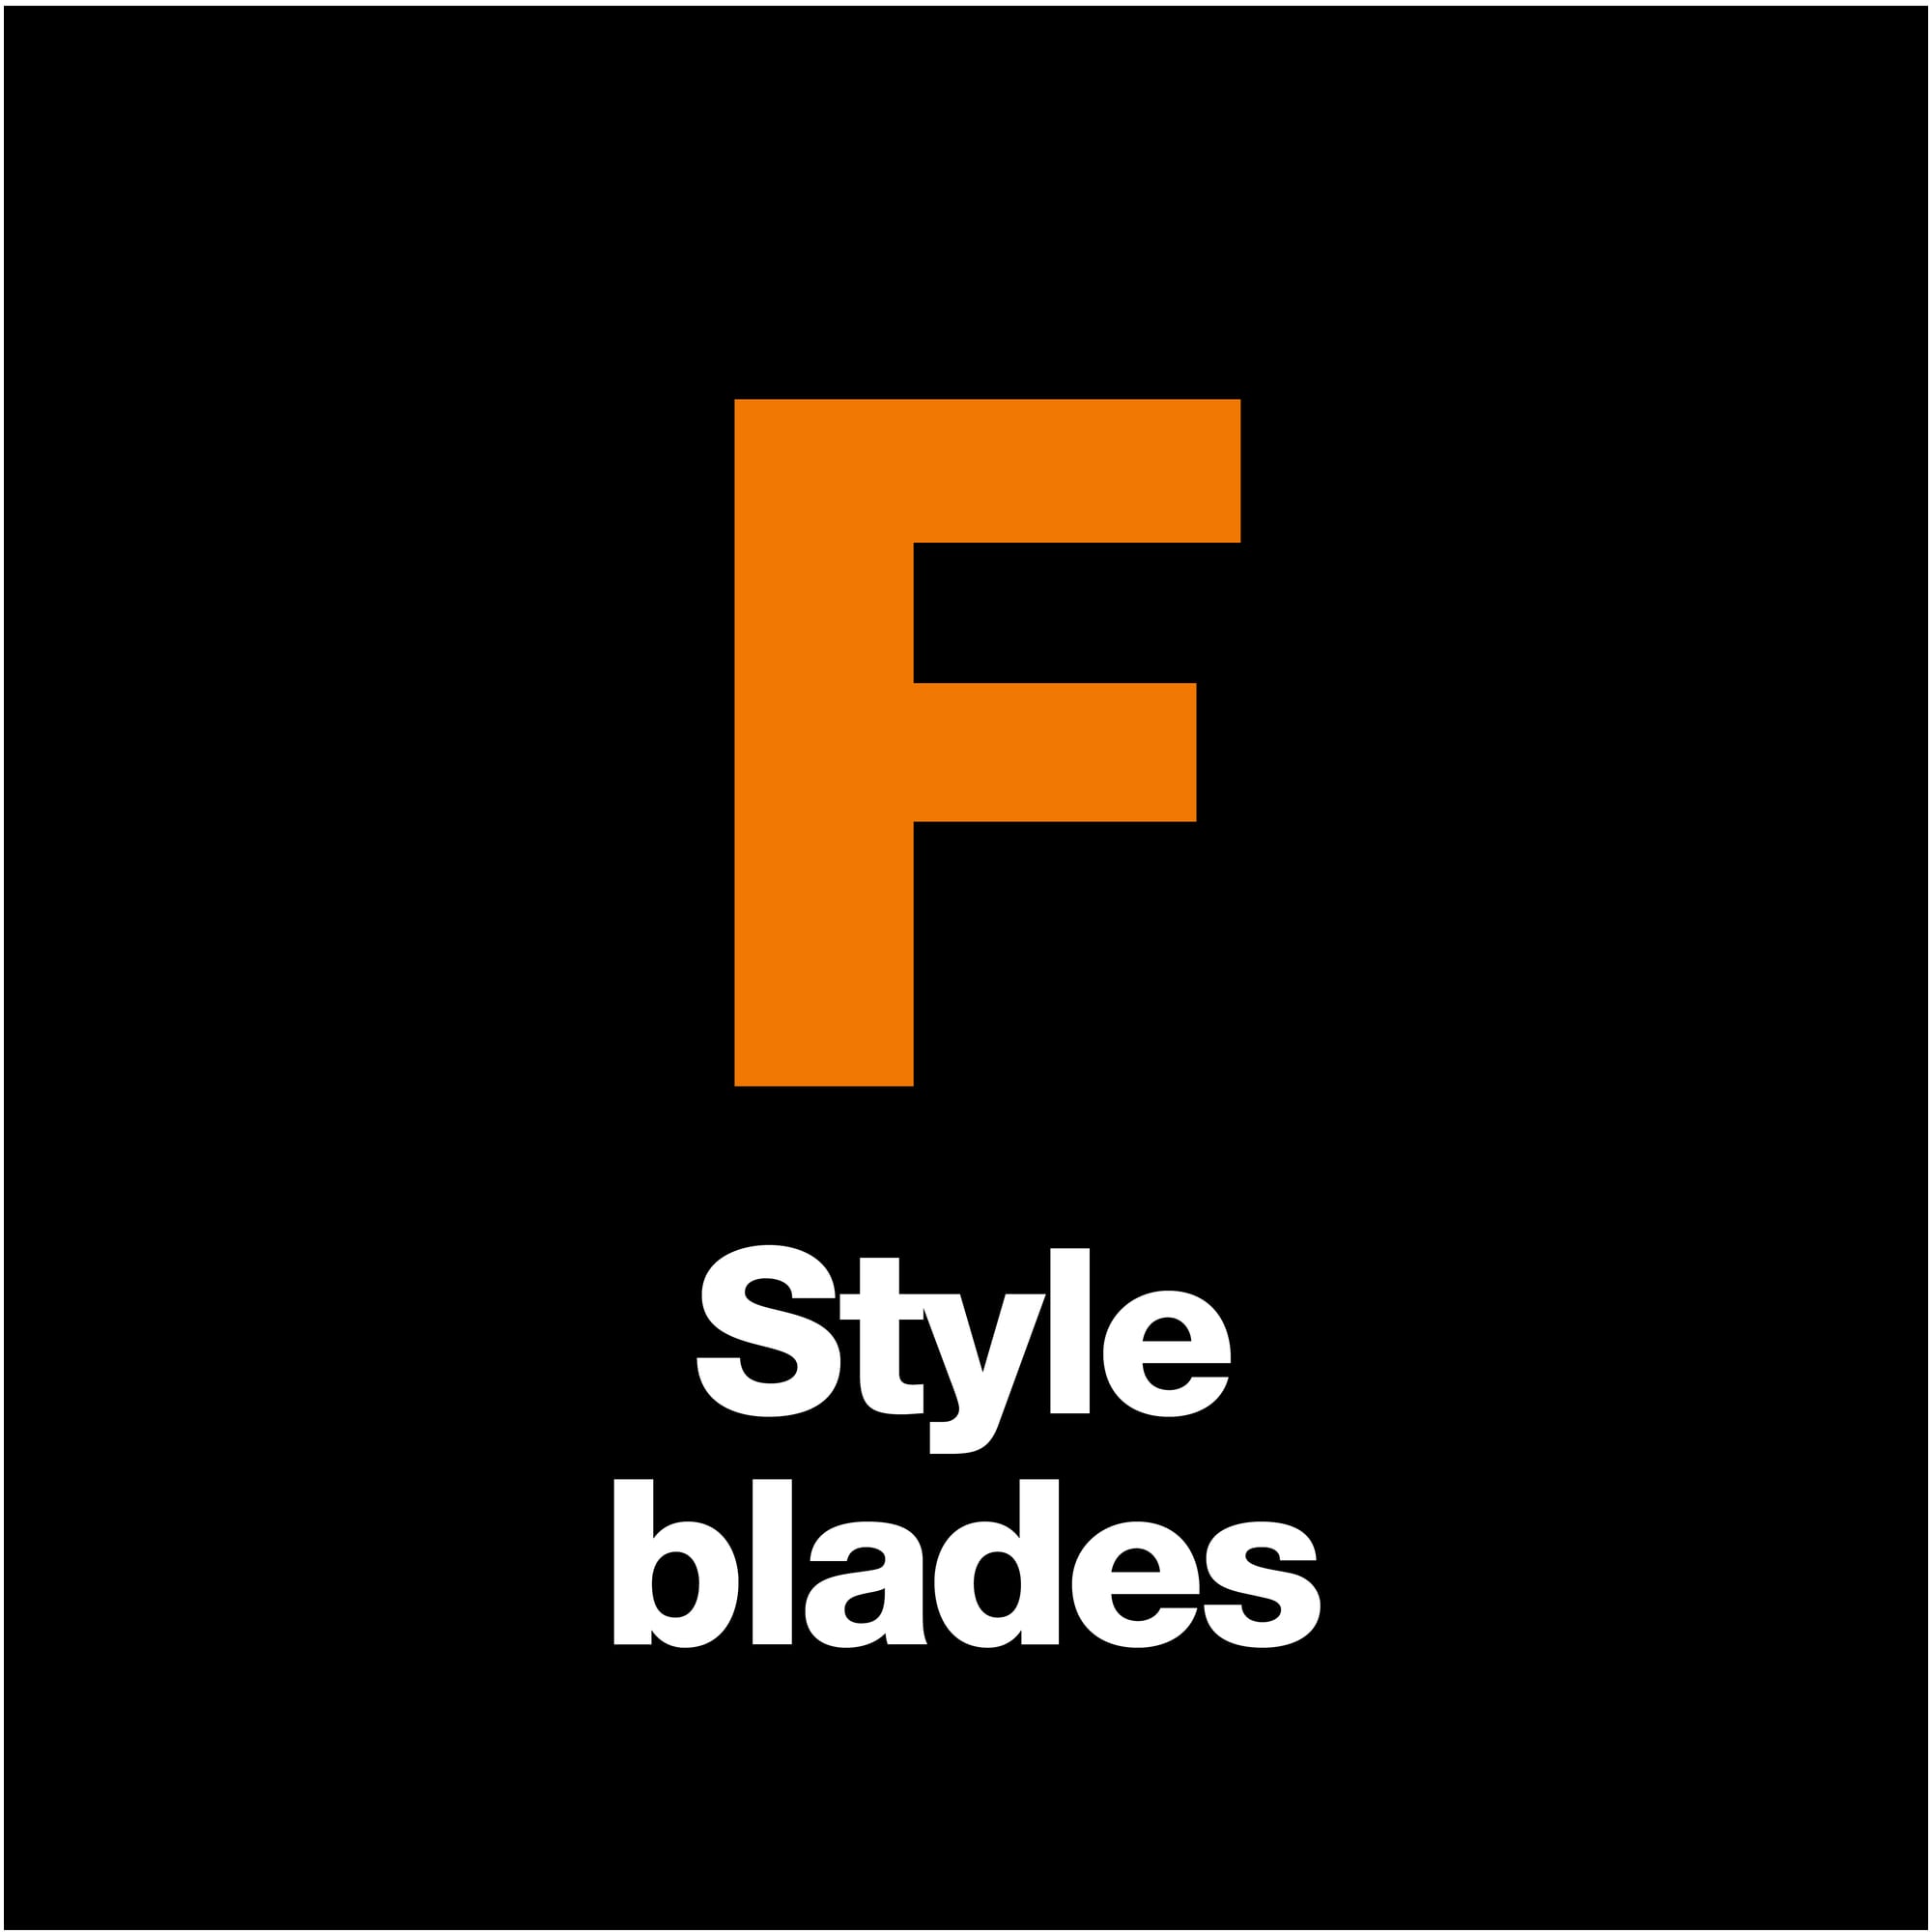 Fiskars&#xAE; Rotary Trimmer Cutting Blades